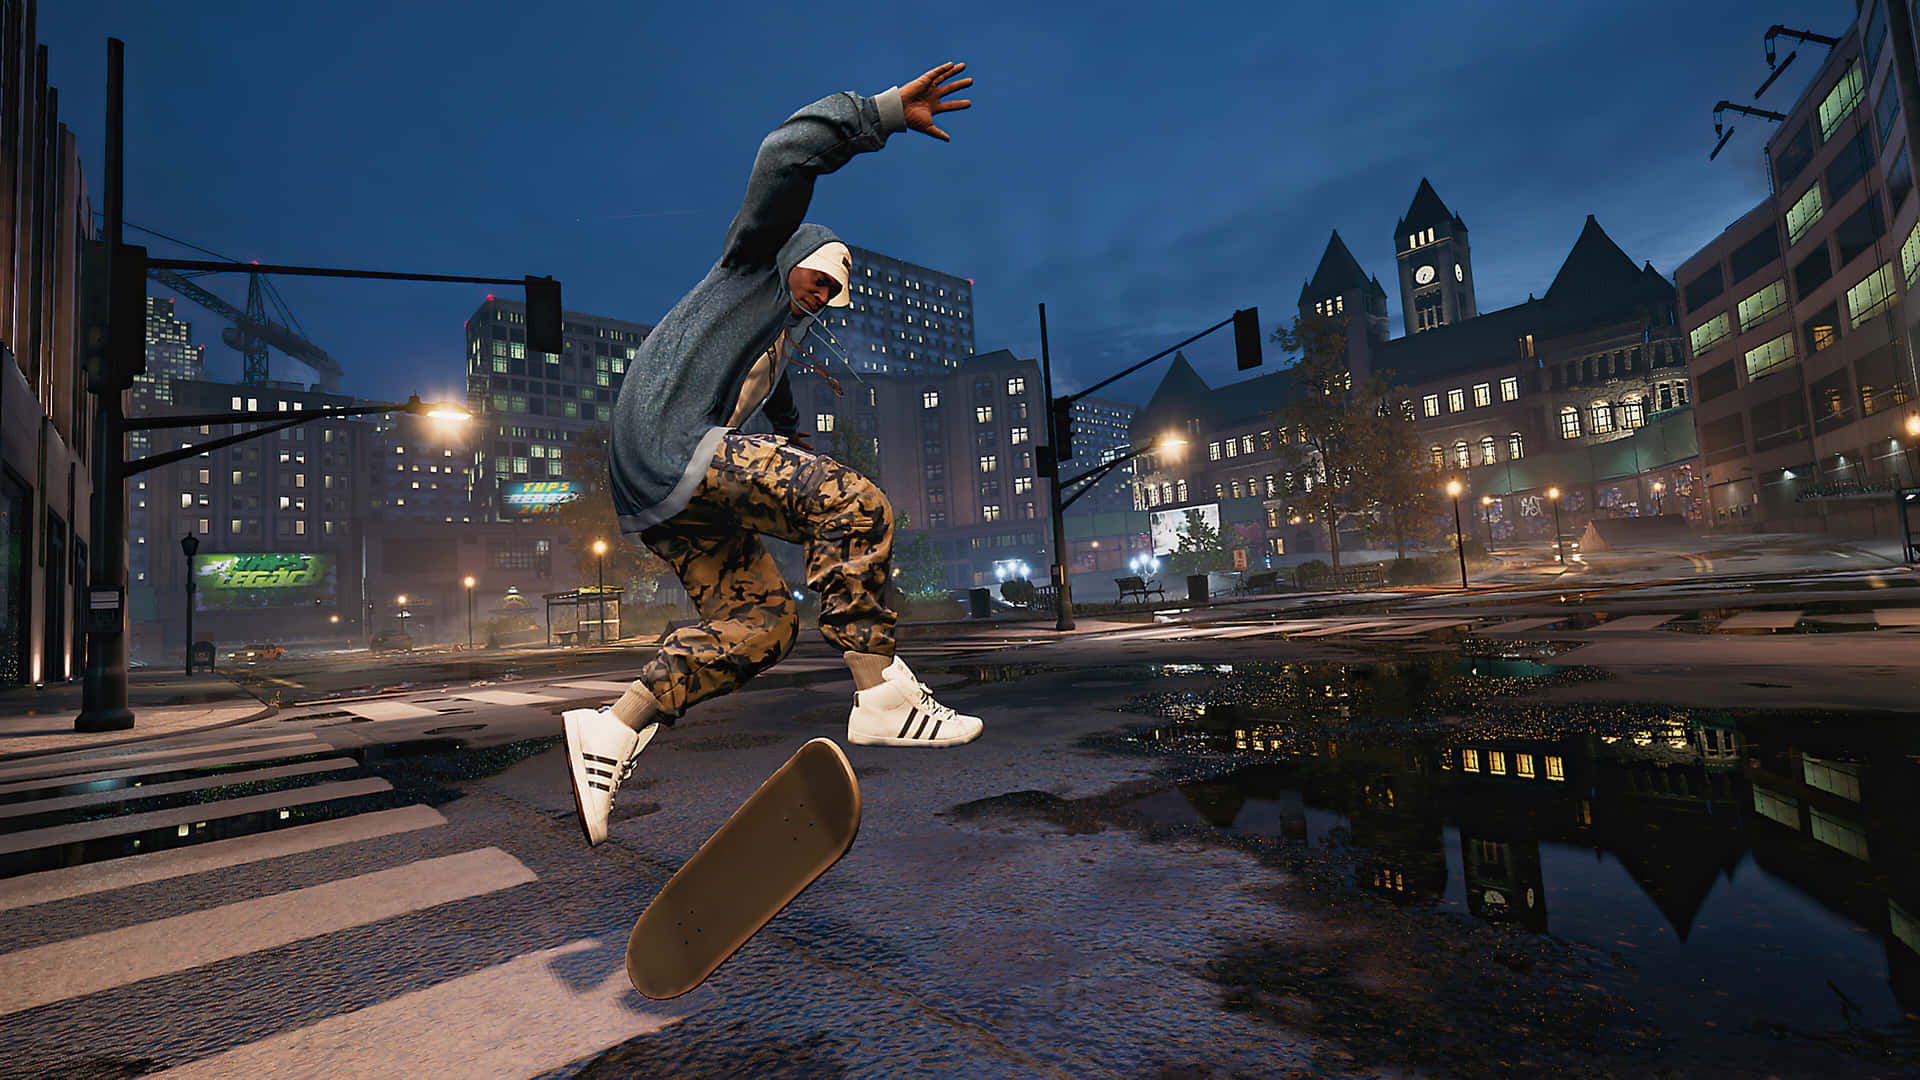 Urban Skateboarding Night Scene Background